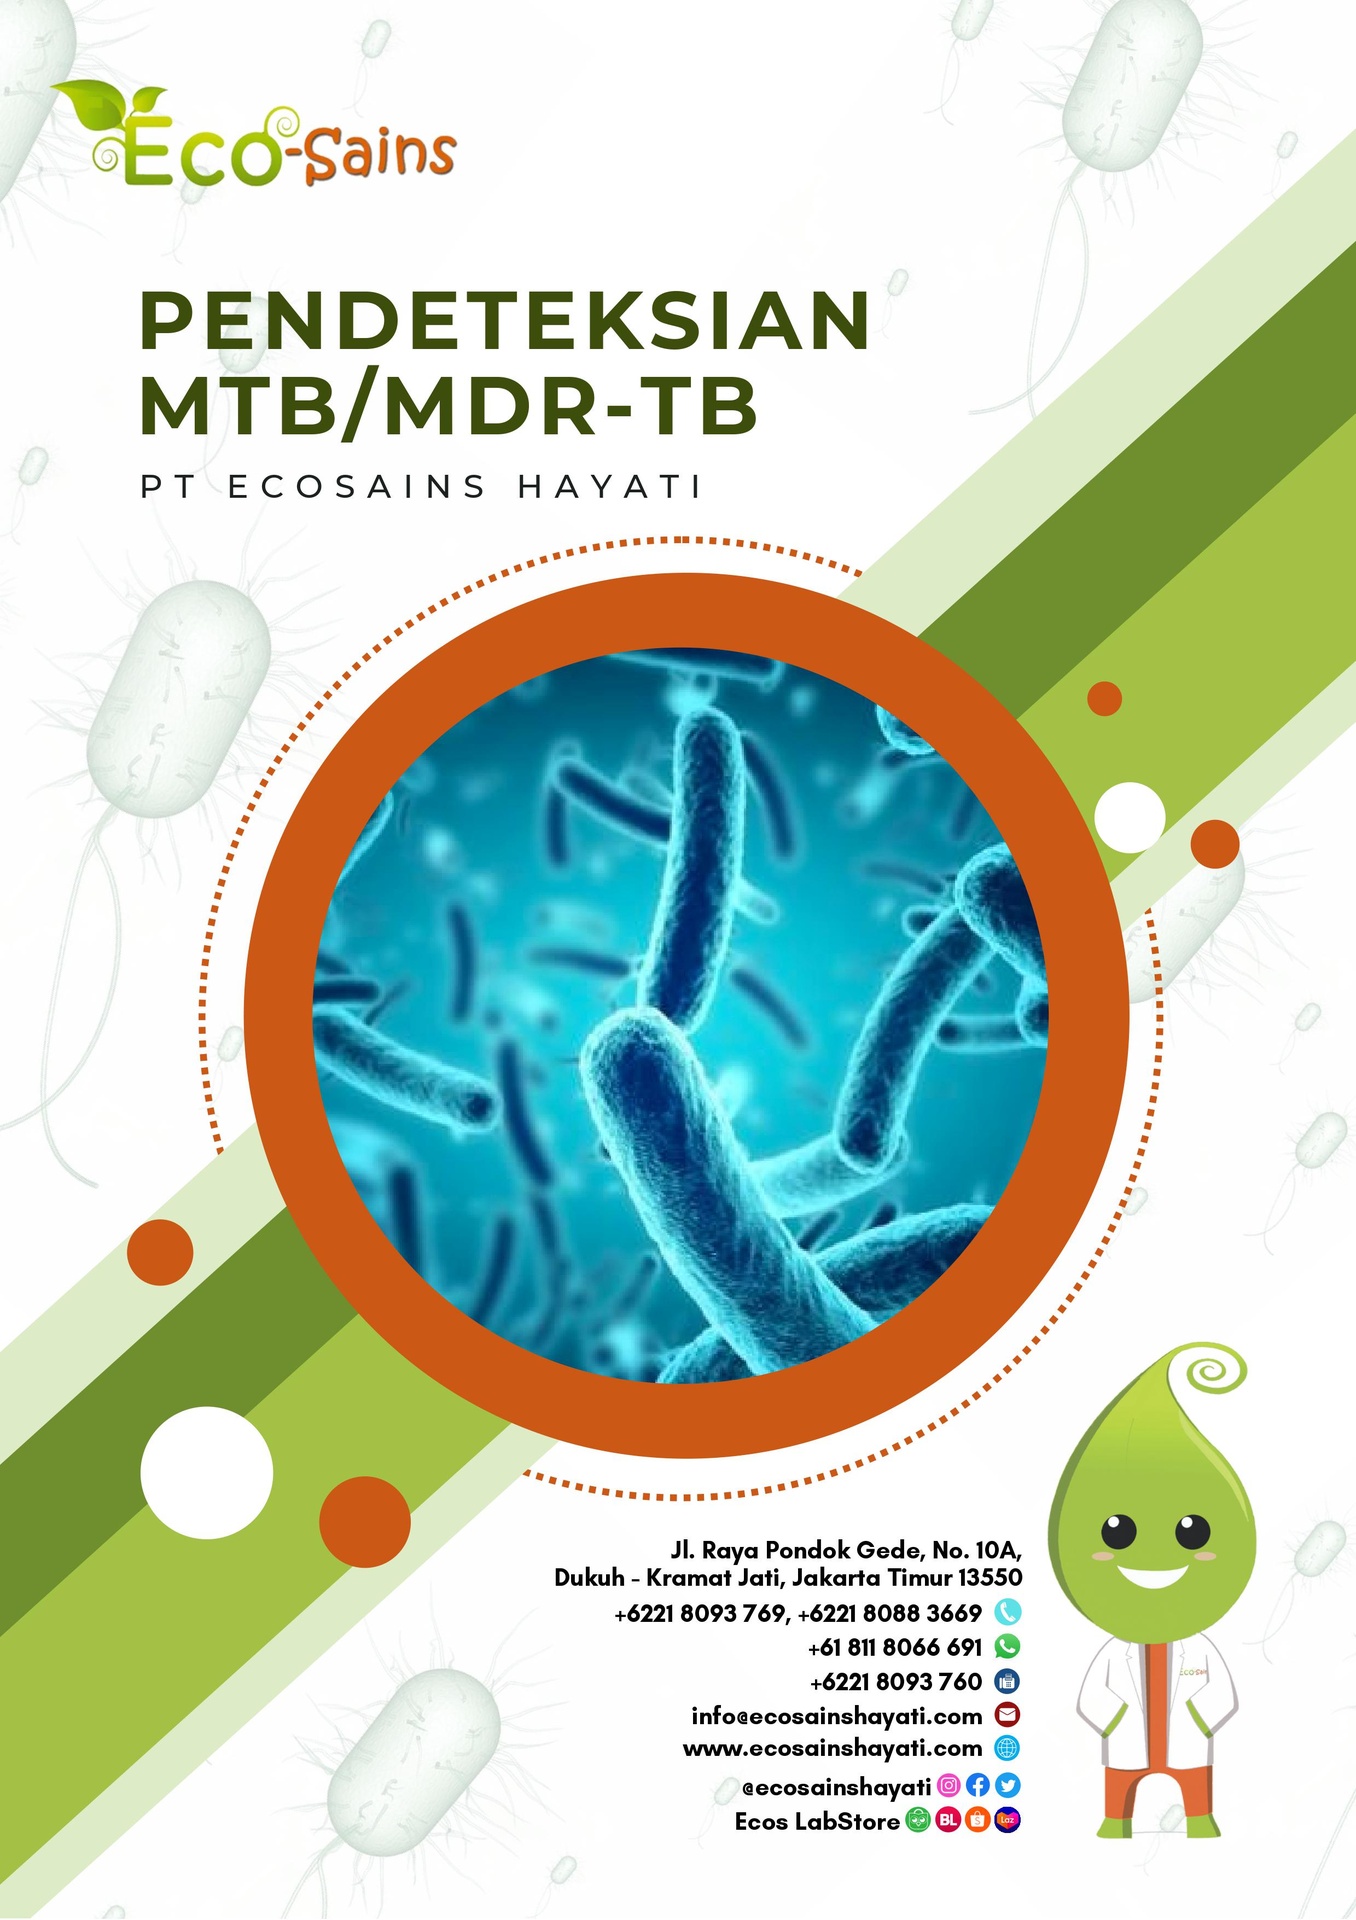 PENDETEKSIAN MTB/MDR-TB